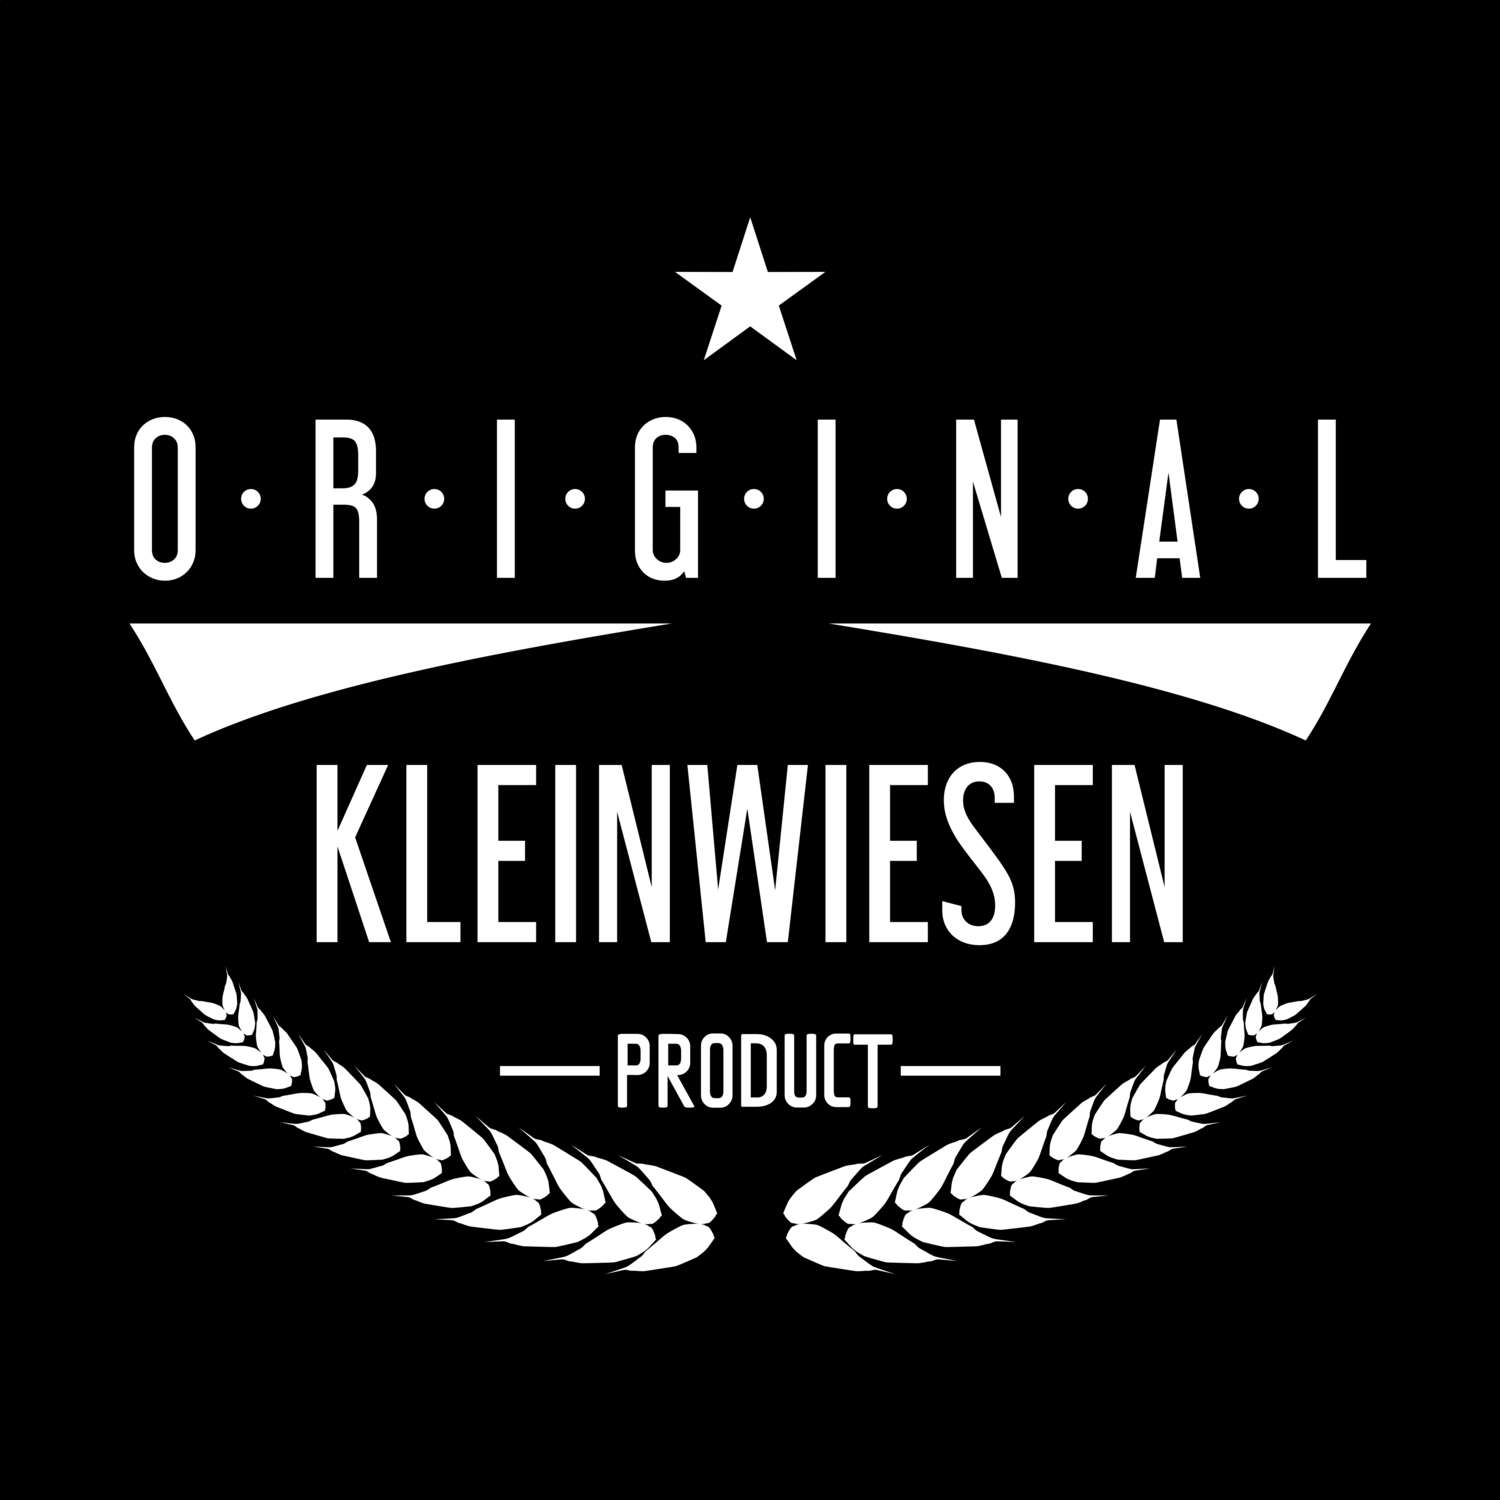 Kleinwiesen T-Shirt »Original Product«